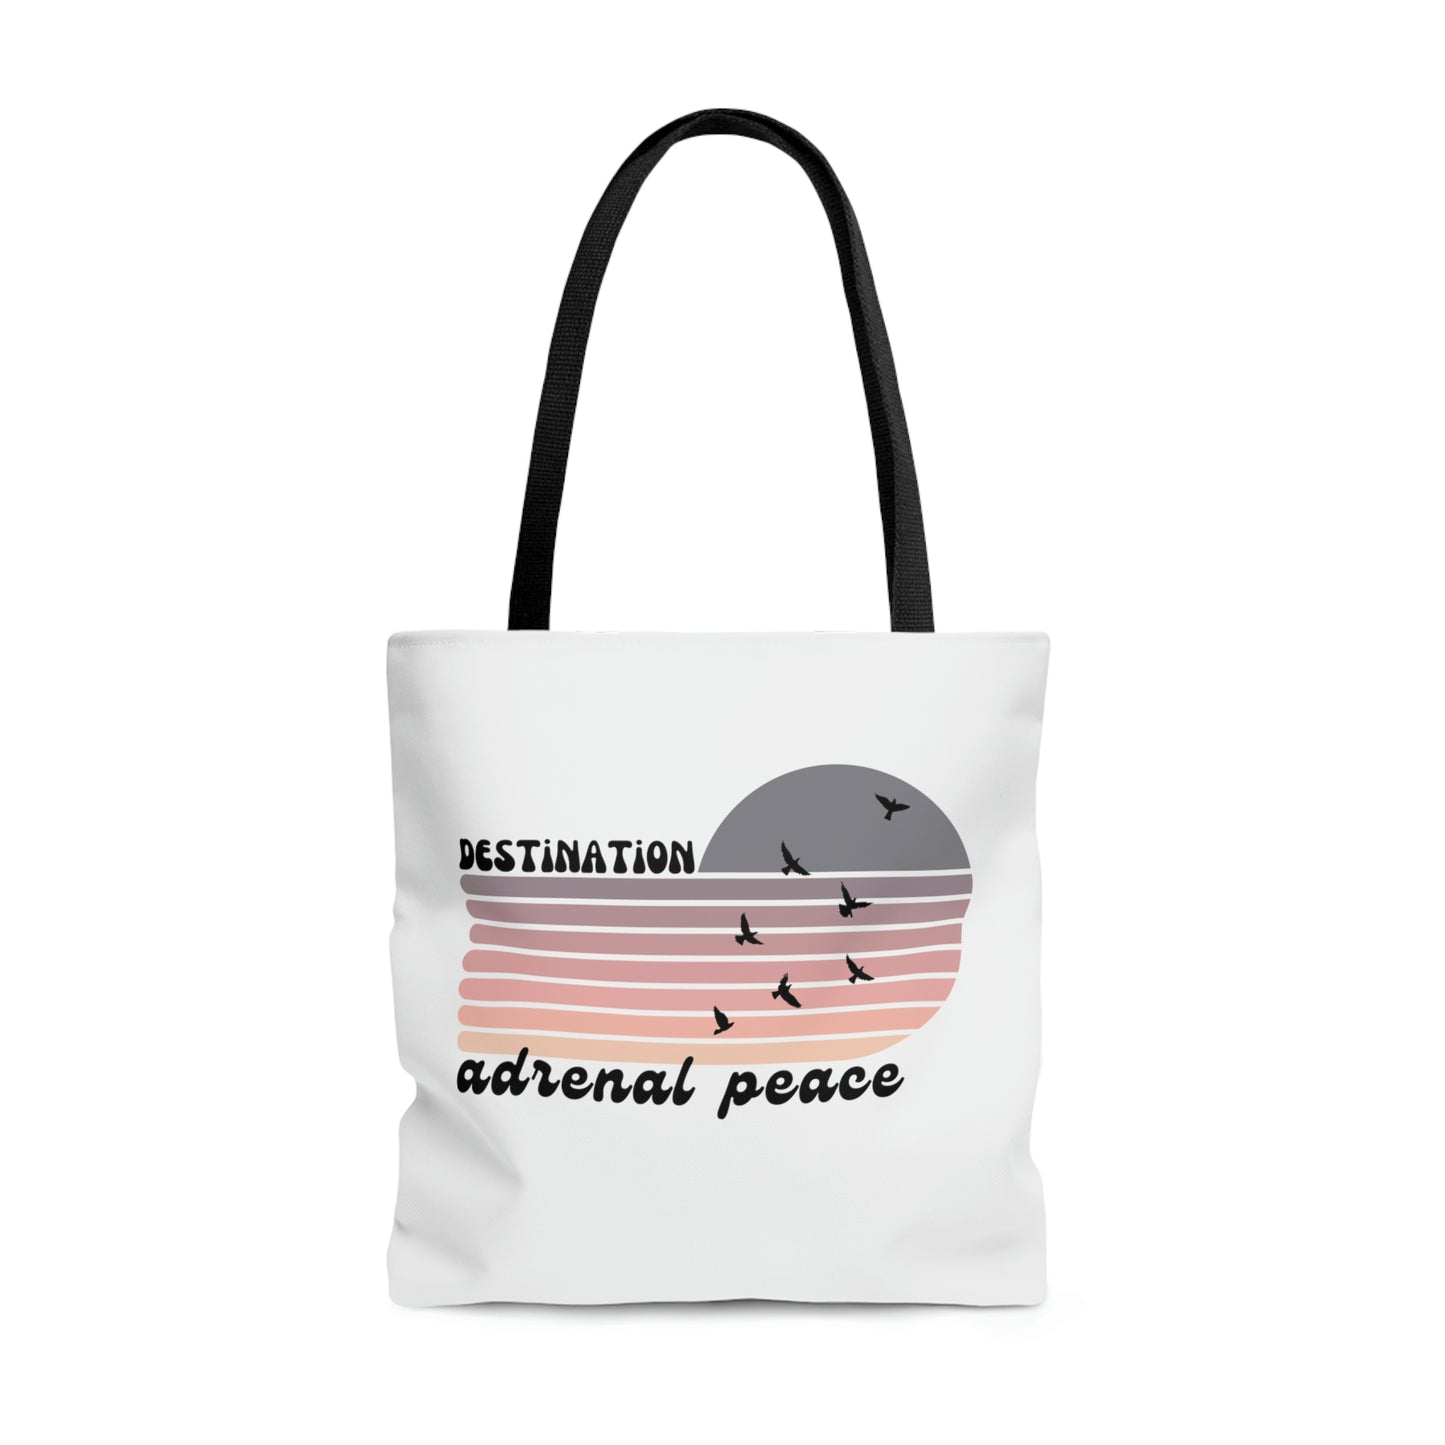 Destination: Adrenal Peace (purple gradient) Tote Bag in 3 sizes